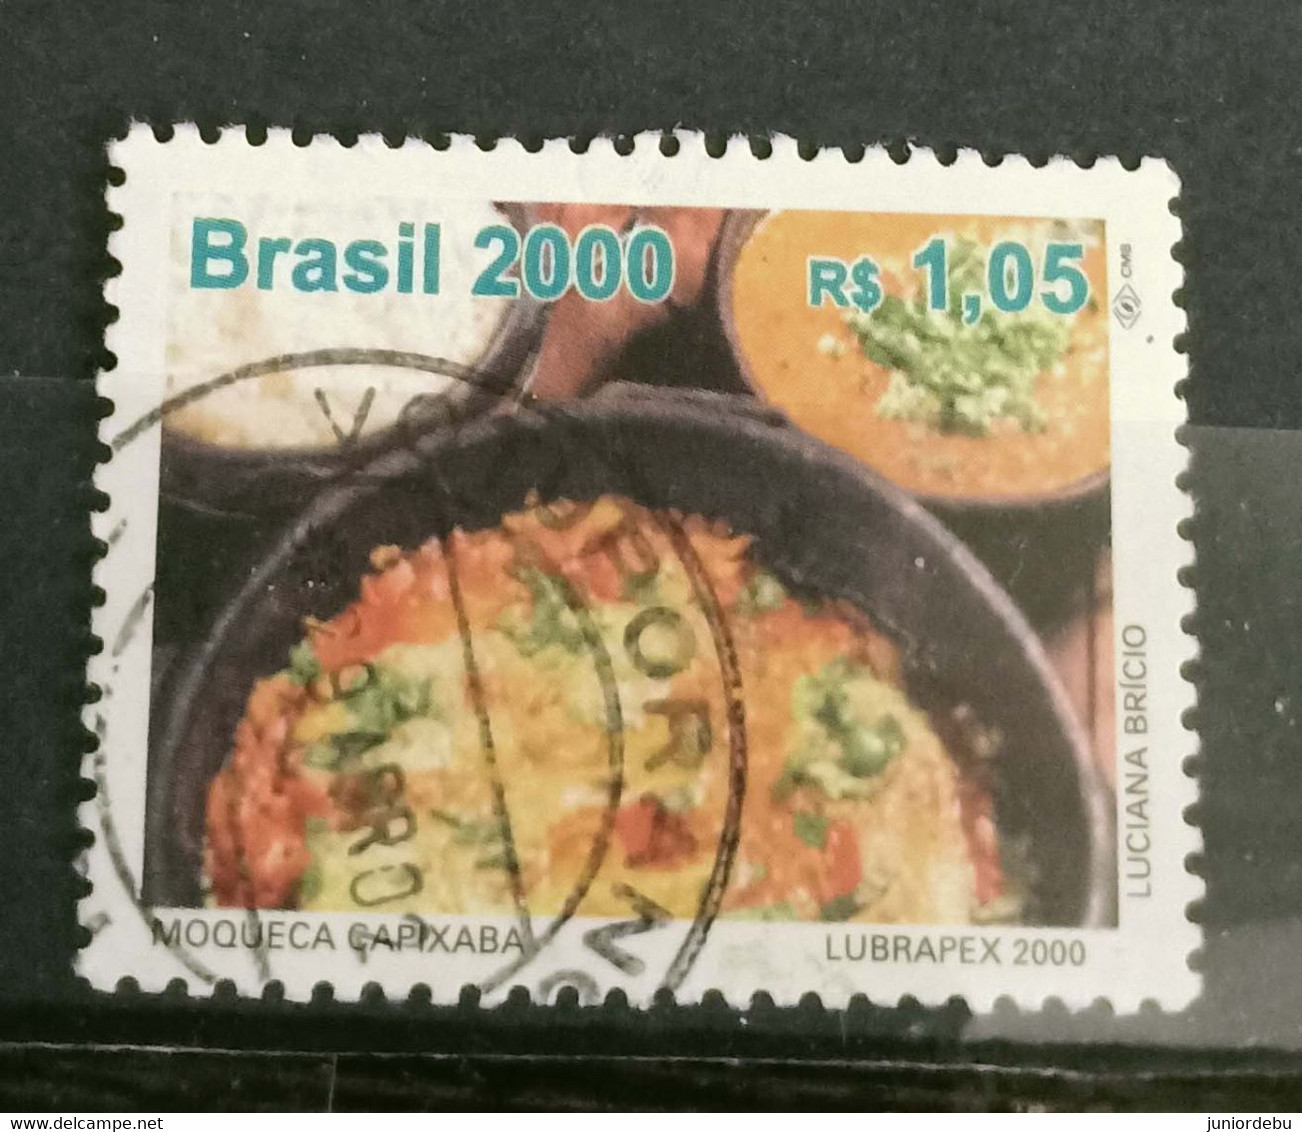 Brasil  - 2000  - International Stamp Exhibition "Lubrapex 2000" - Salvador, Brazil - Cultural Dish, - USED. ( D) - Gebruikt